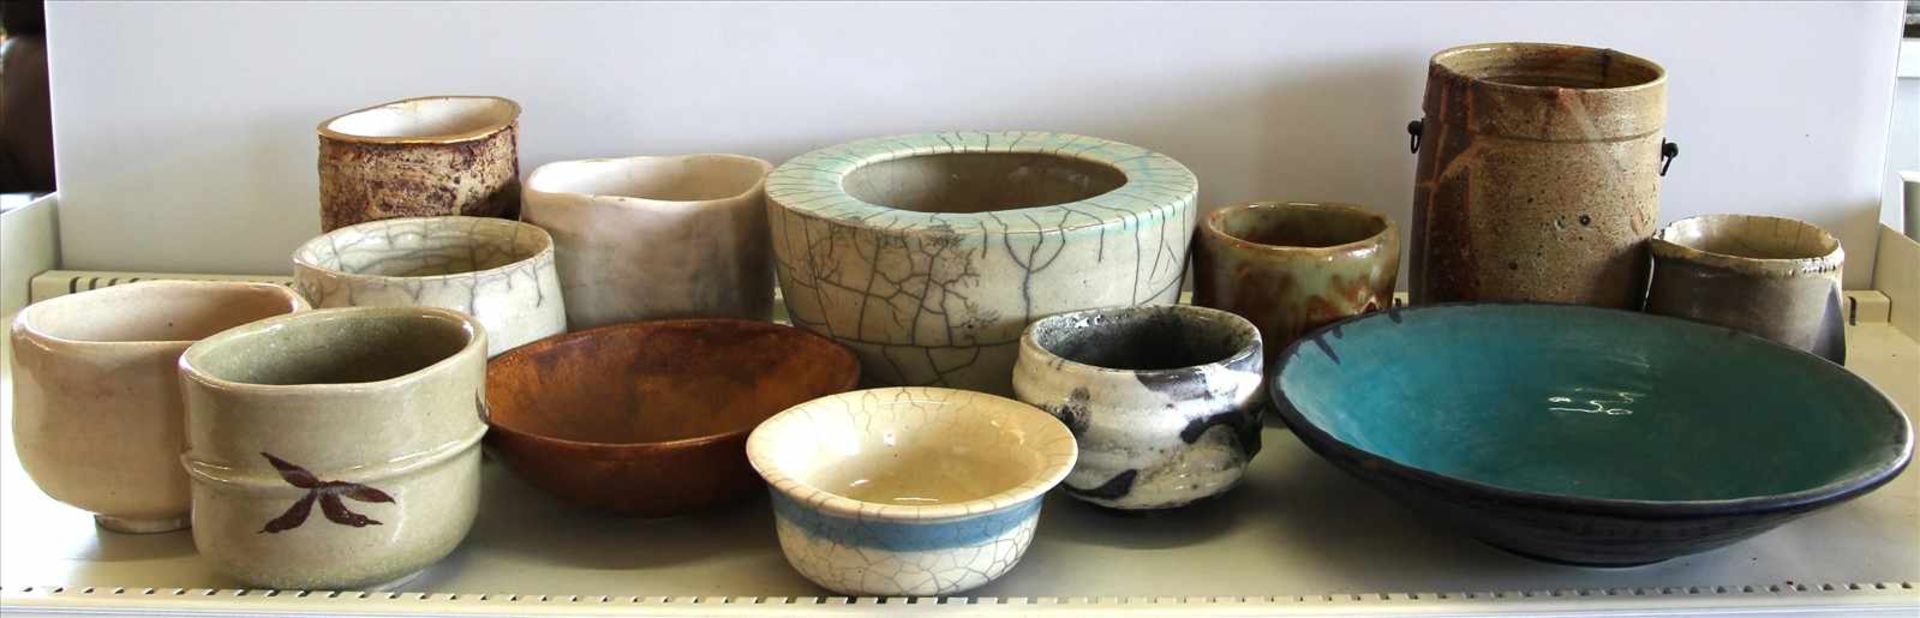 Konvolut Keramik20. Jh. Insgesamt 13 Teile Künstlerkeramik ( art pottery ) in diversen Formen und